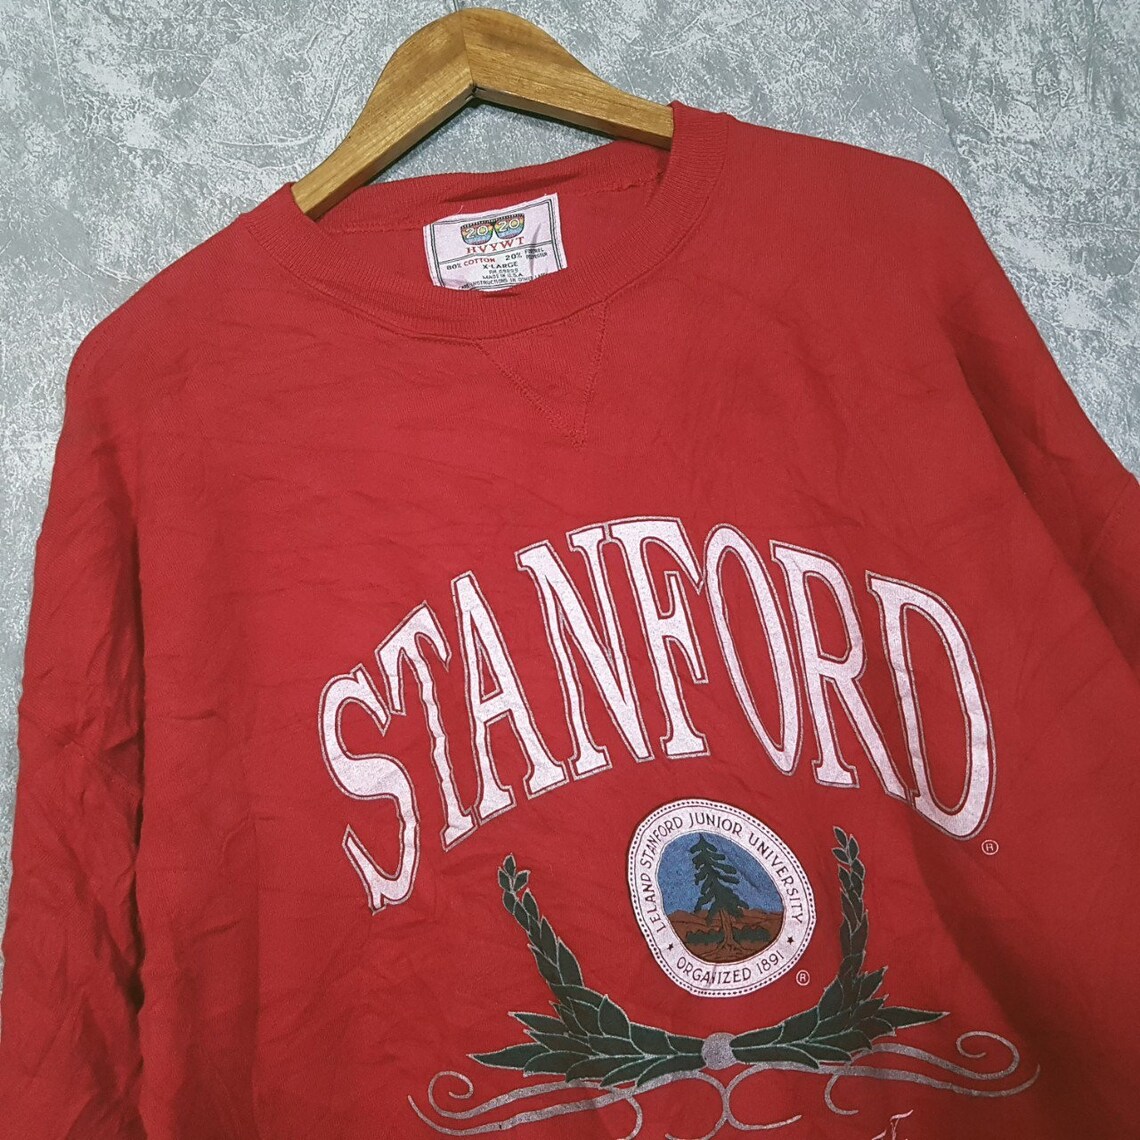 Vintage Stanford University Sweater | Etsy